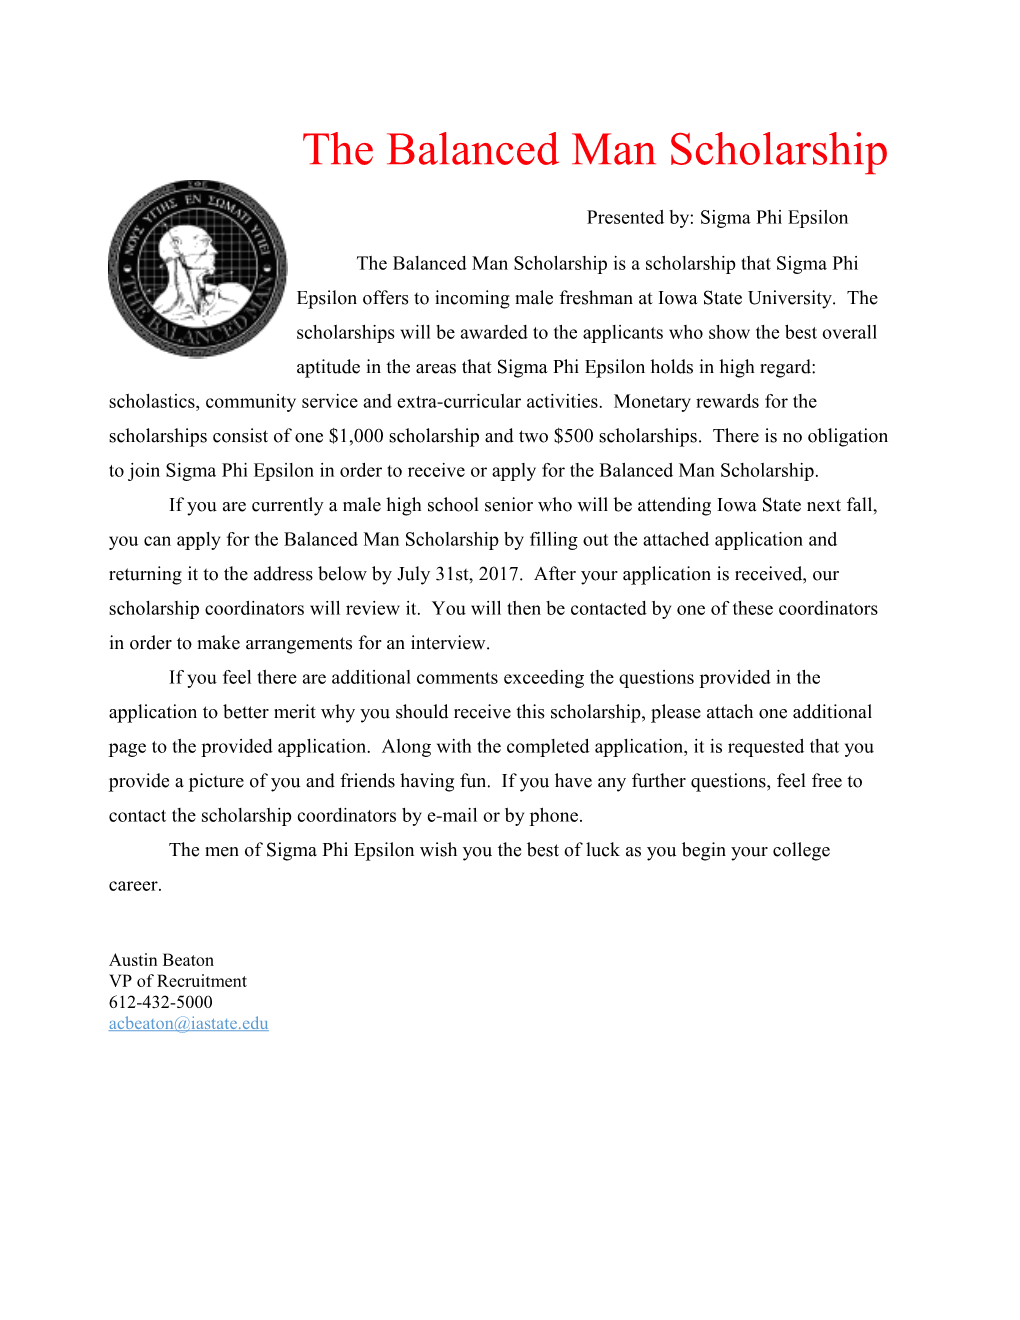 The Balanced Man Scholarship